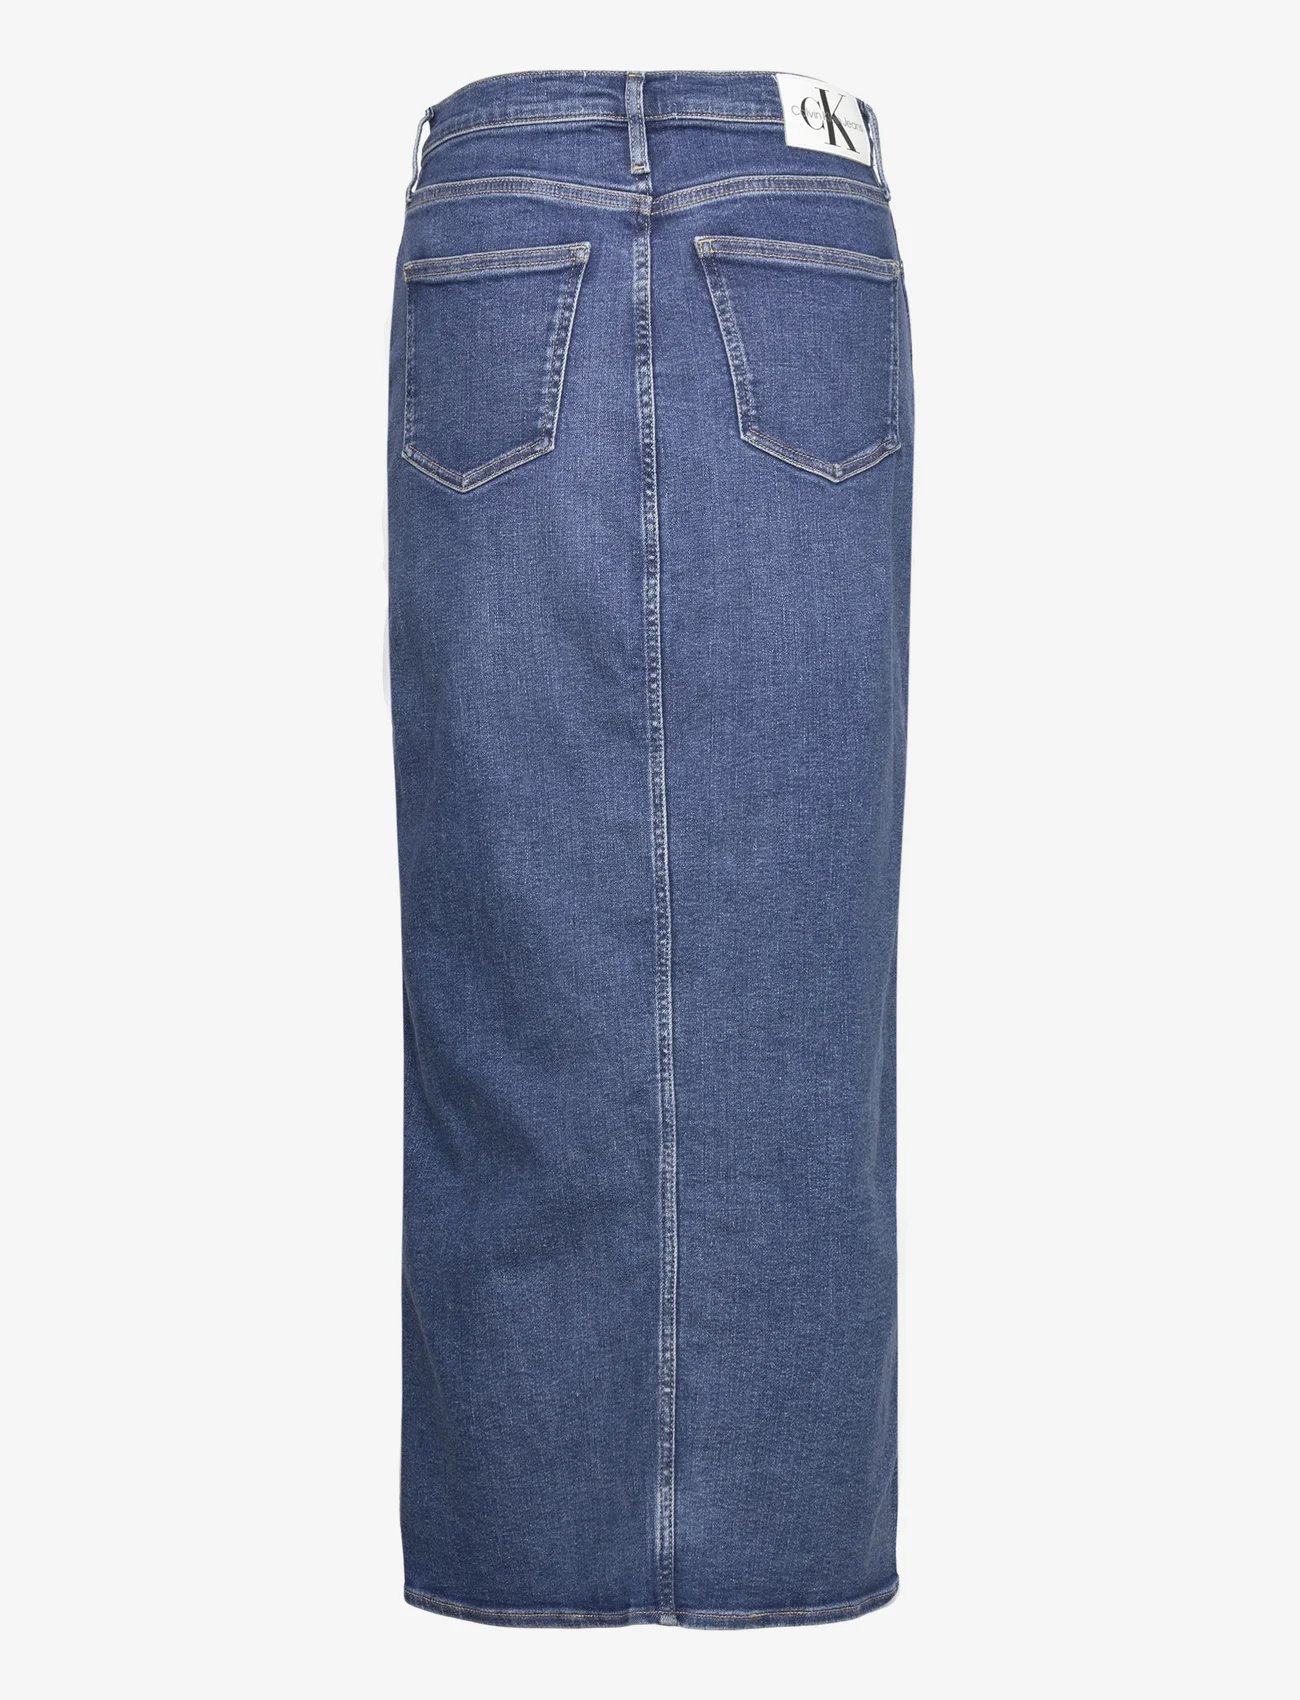 Calvin Klein Jeans - FRONT SPLIT MIDI DENIM SKIRT - jeansröcke - denim medium - 1